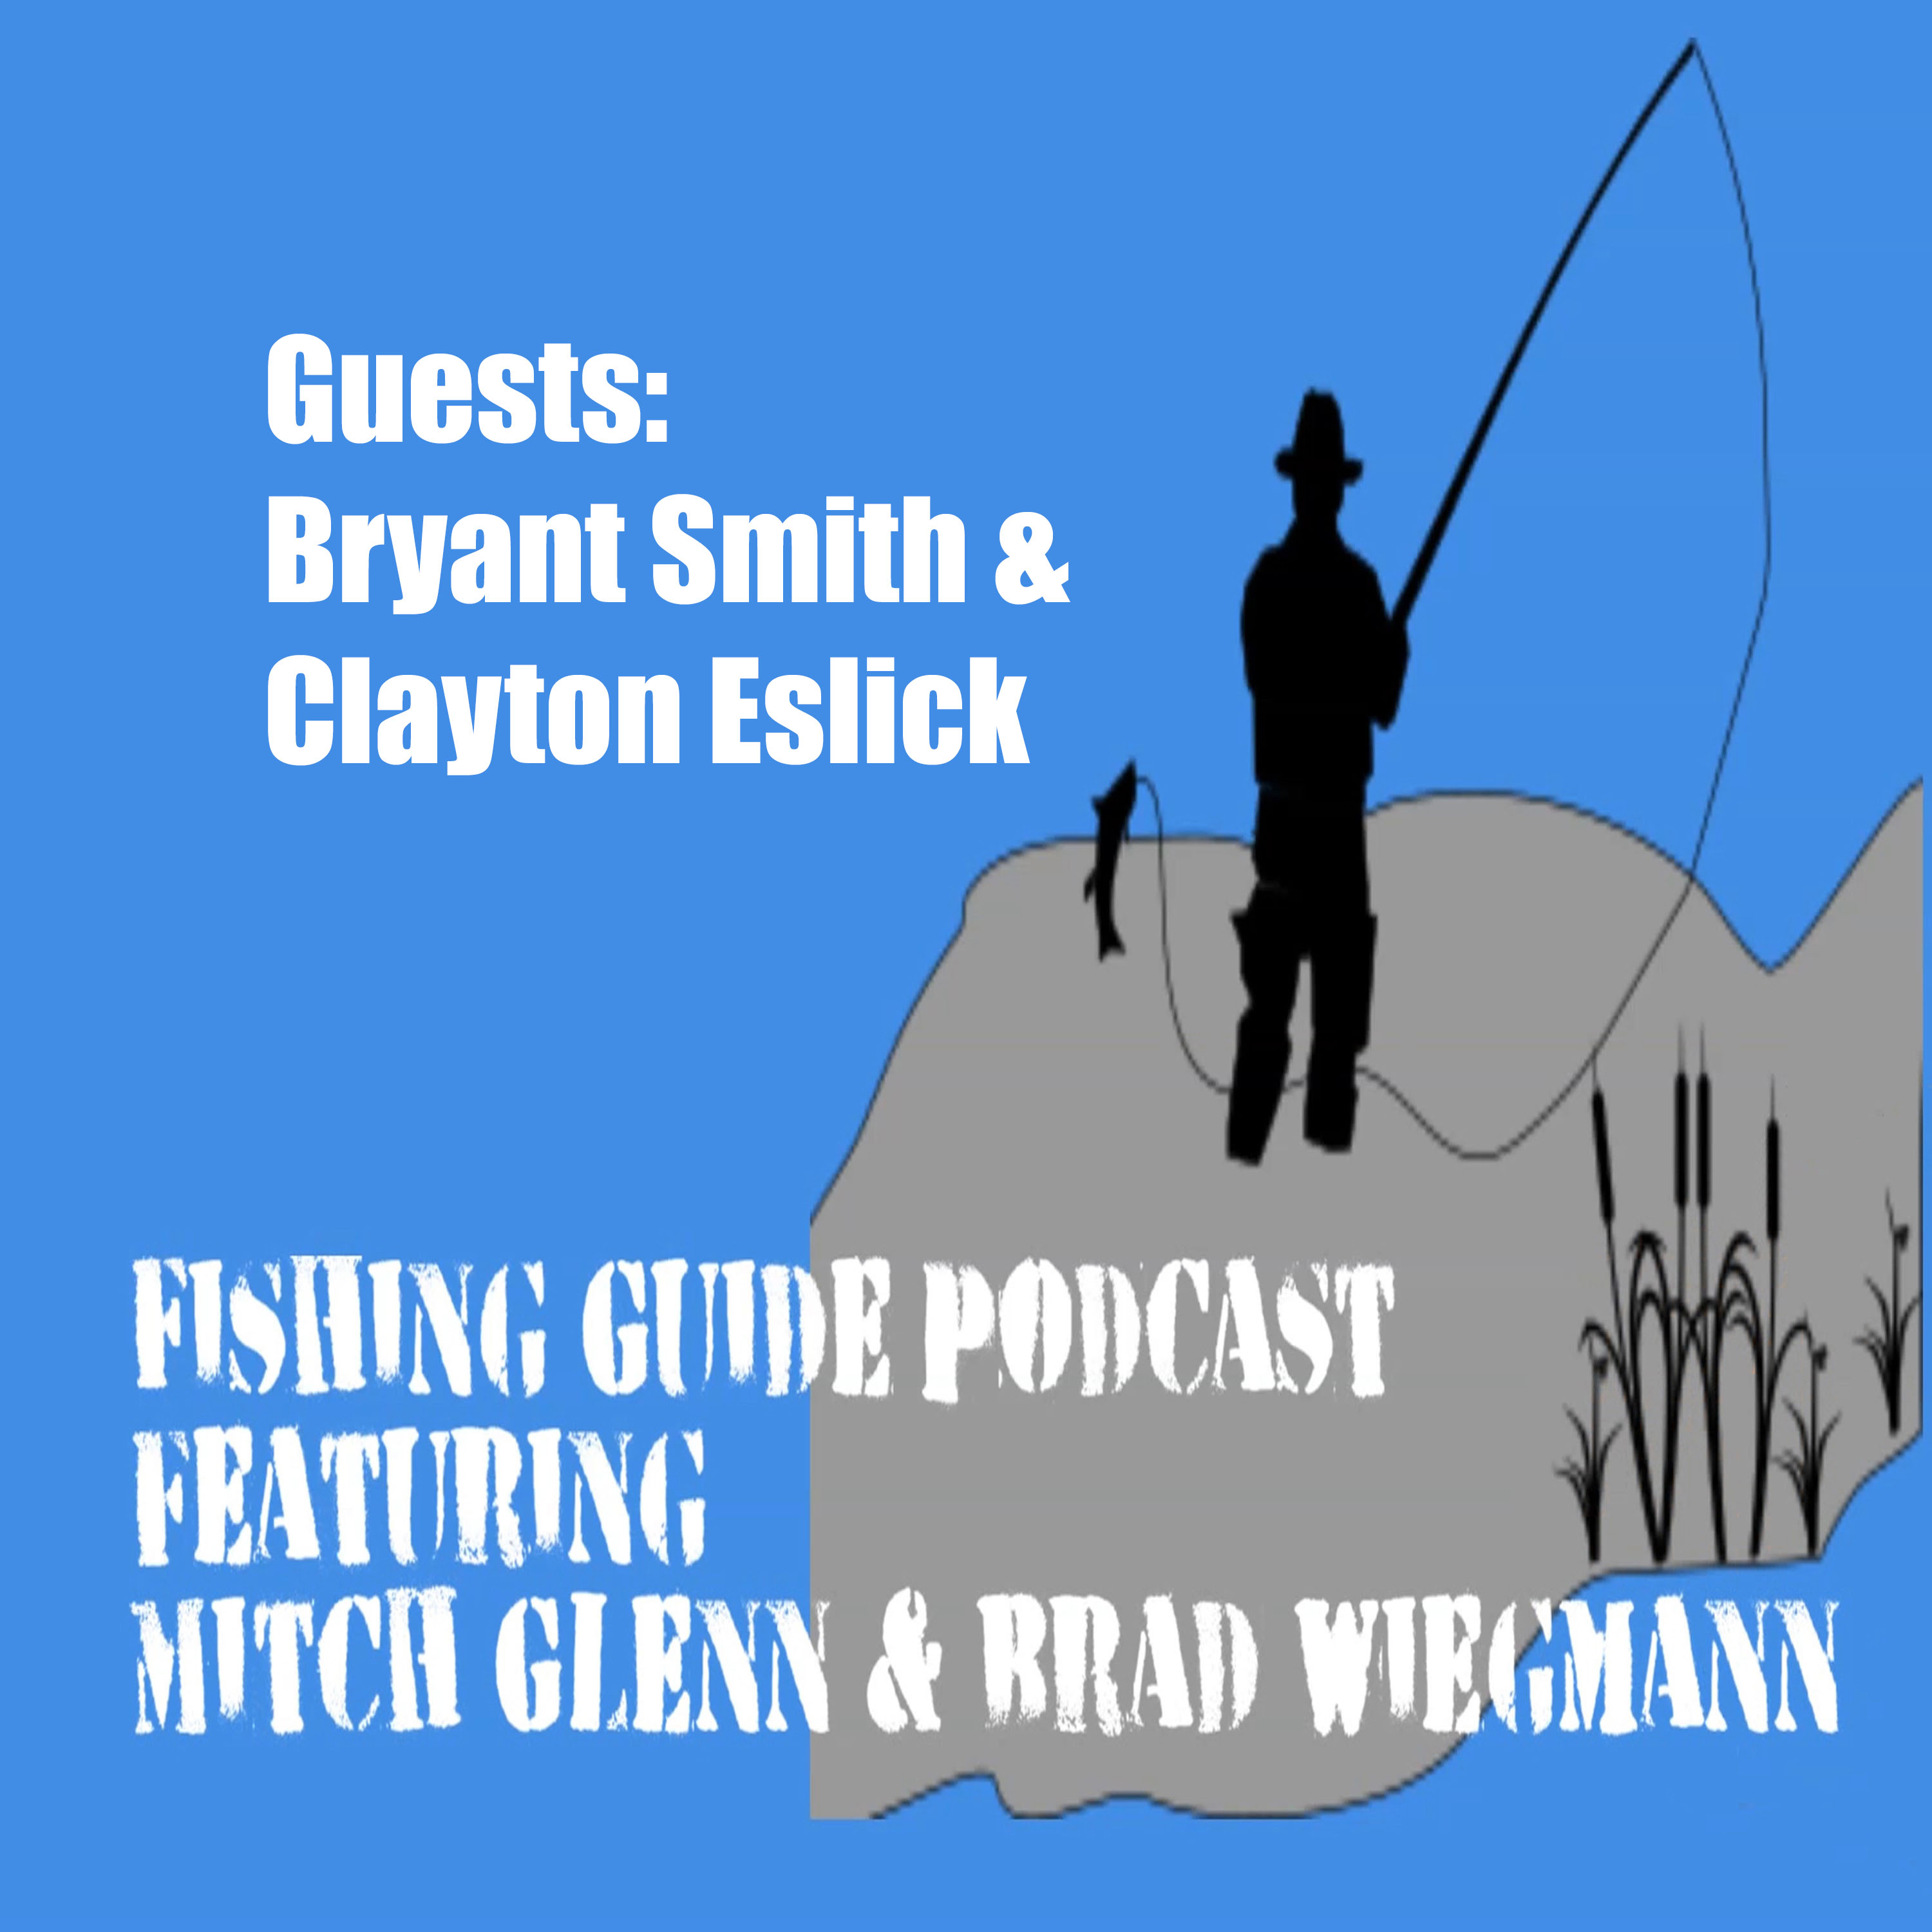 West Coast anglers Bryant Smith and Clayton Eslick talk fishing